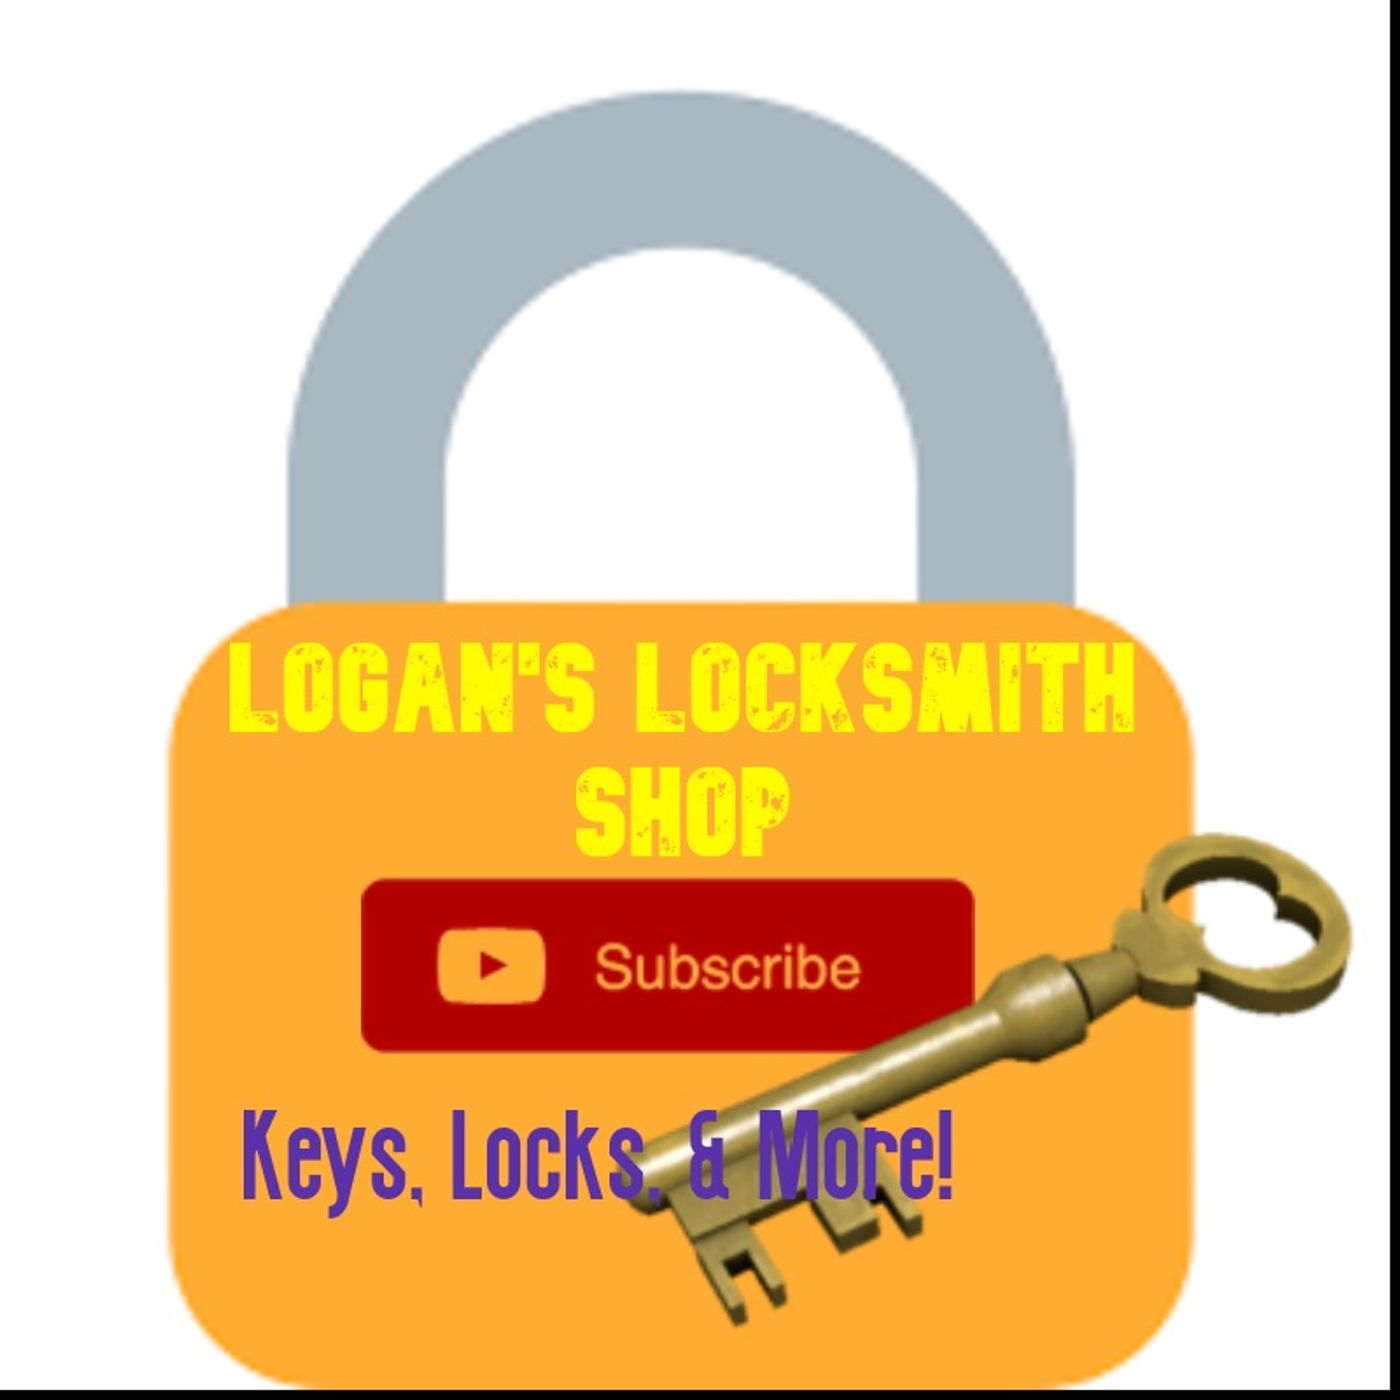 Info about locks